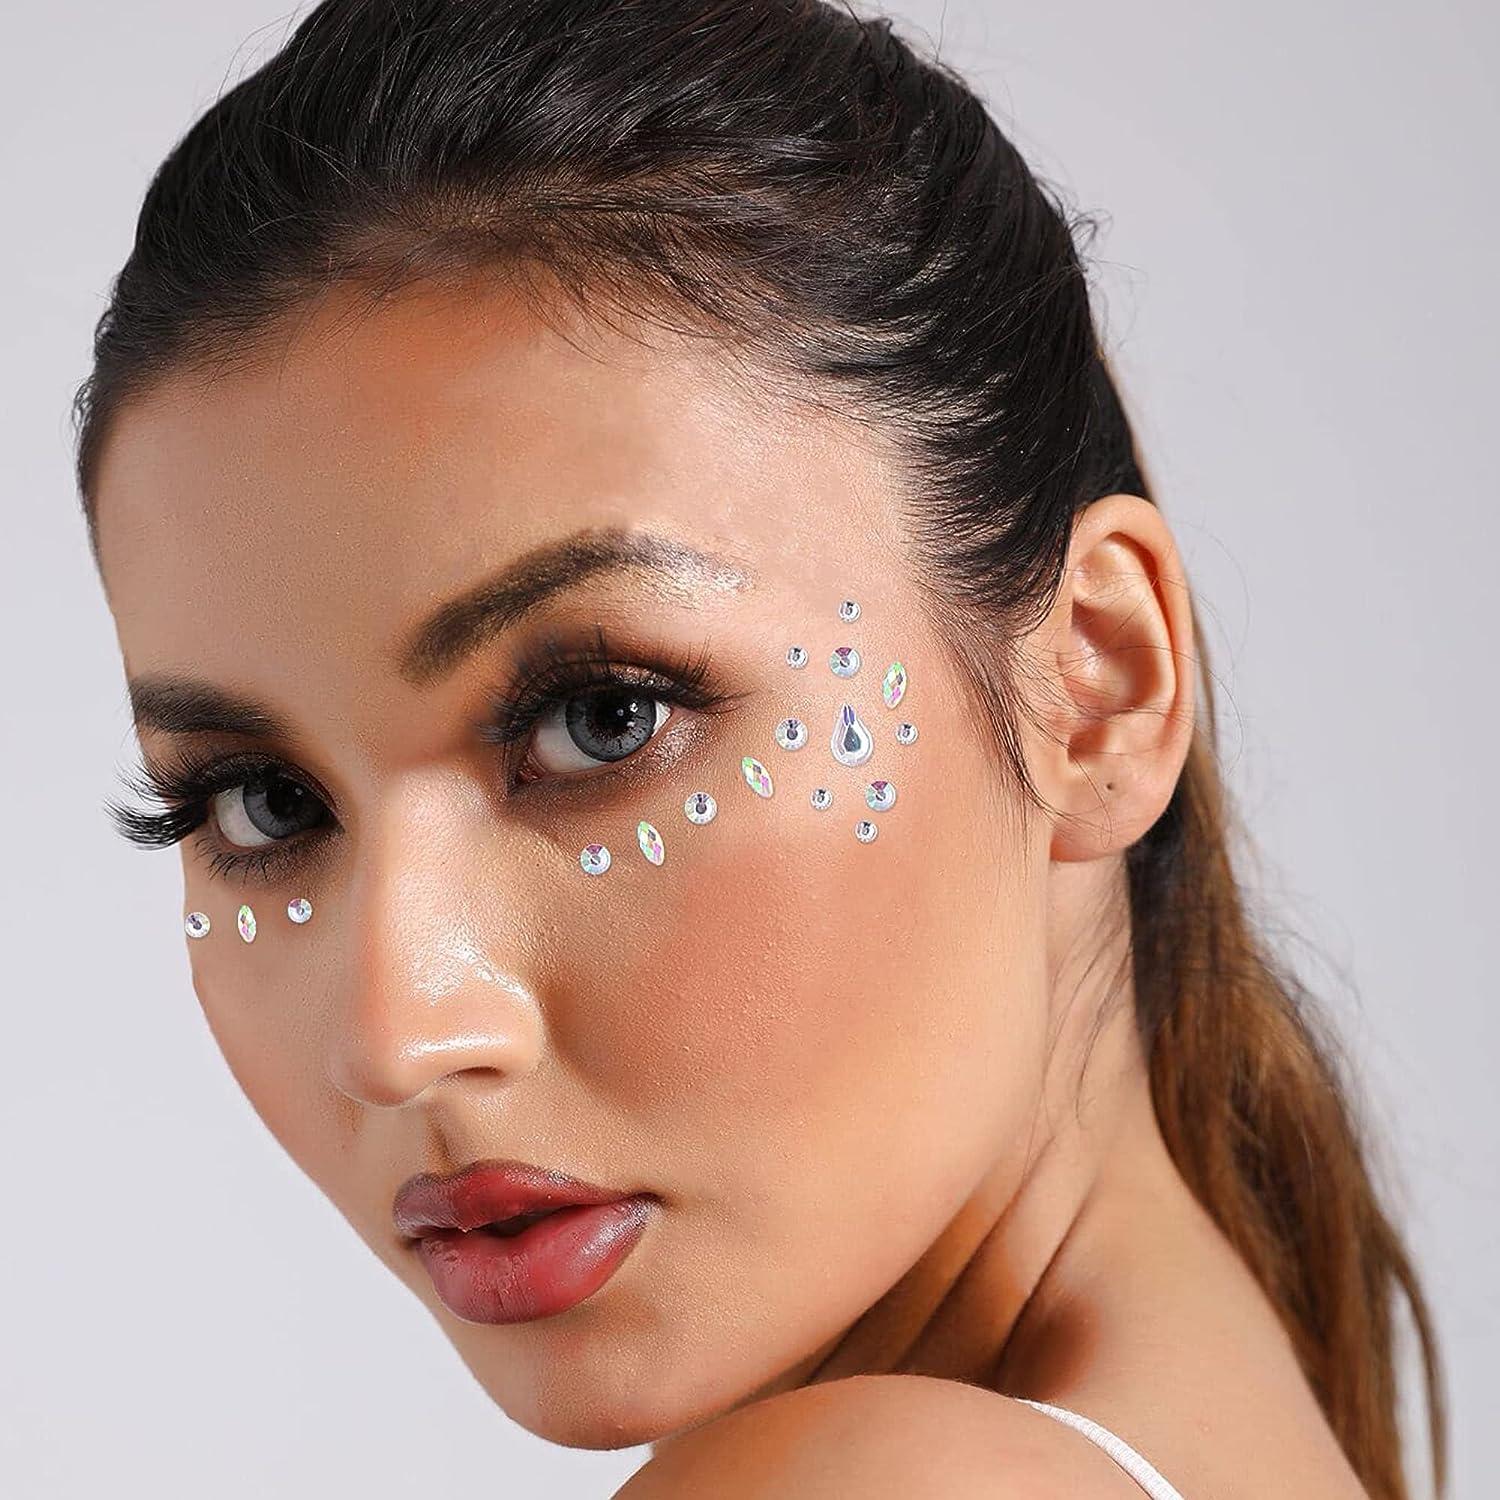 5 Sheets Performance Makeup Gems Face Jewels Eye Makeup